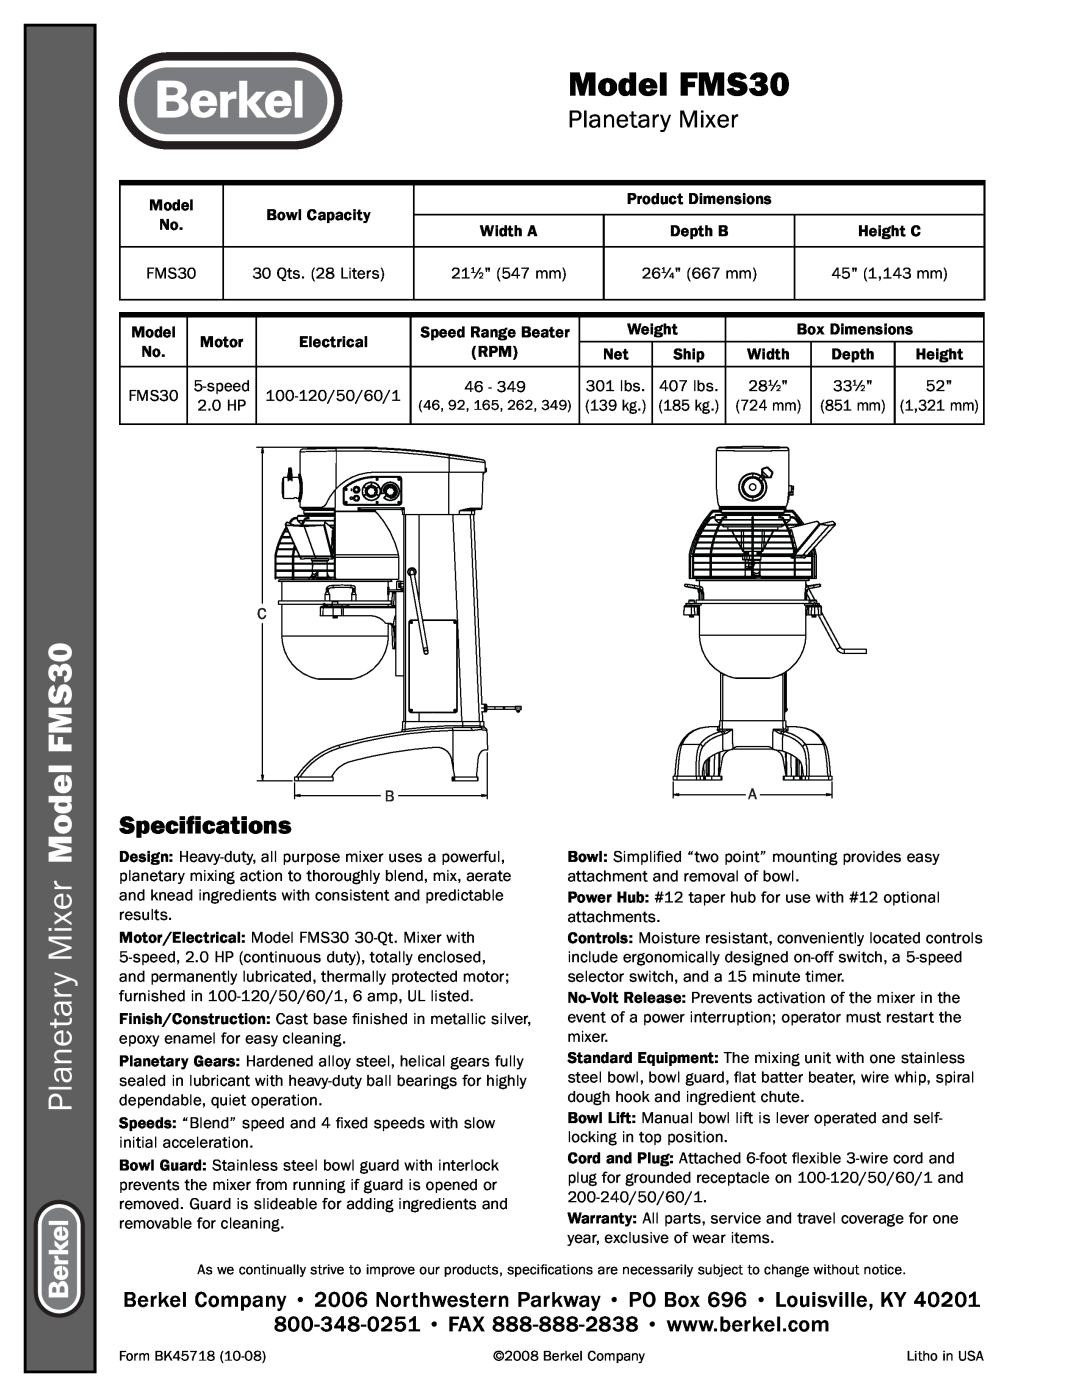 Berkel manual Speciﬁcations, Planetary Mixer Model FMS30 